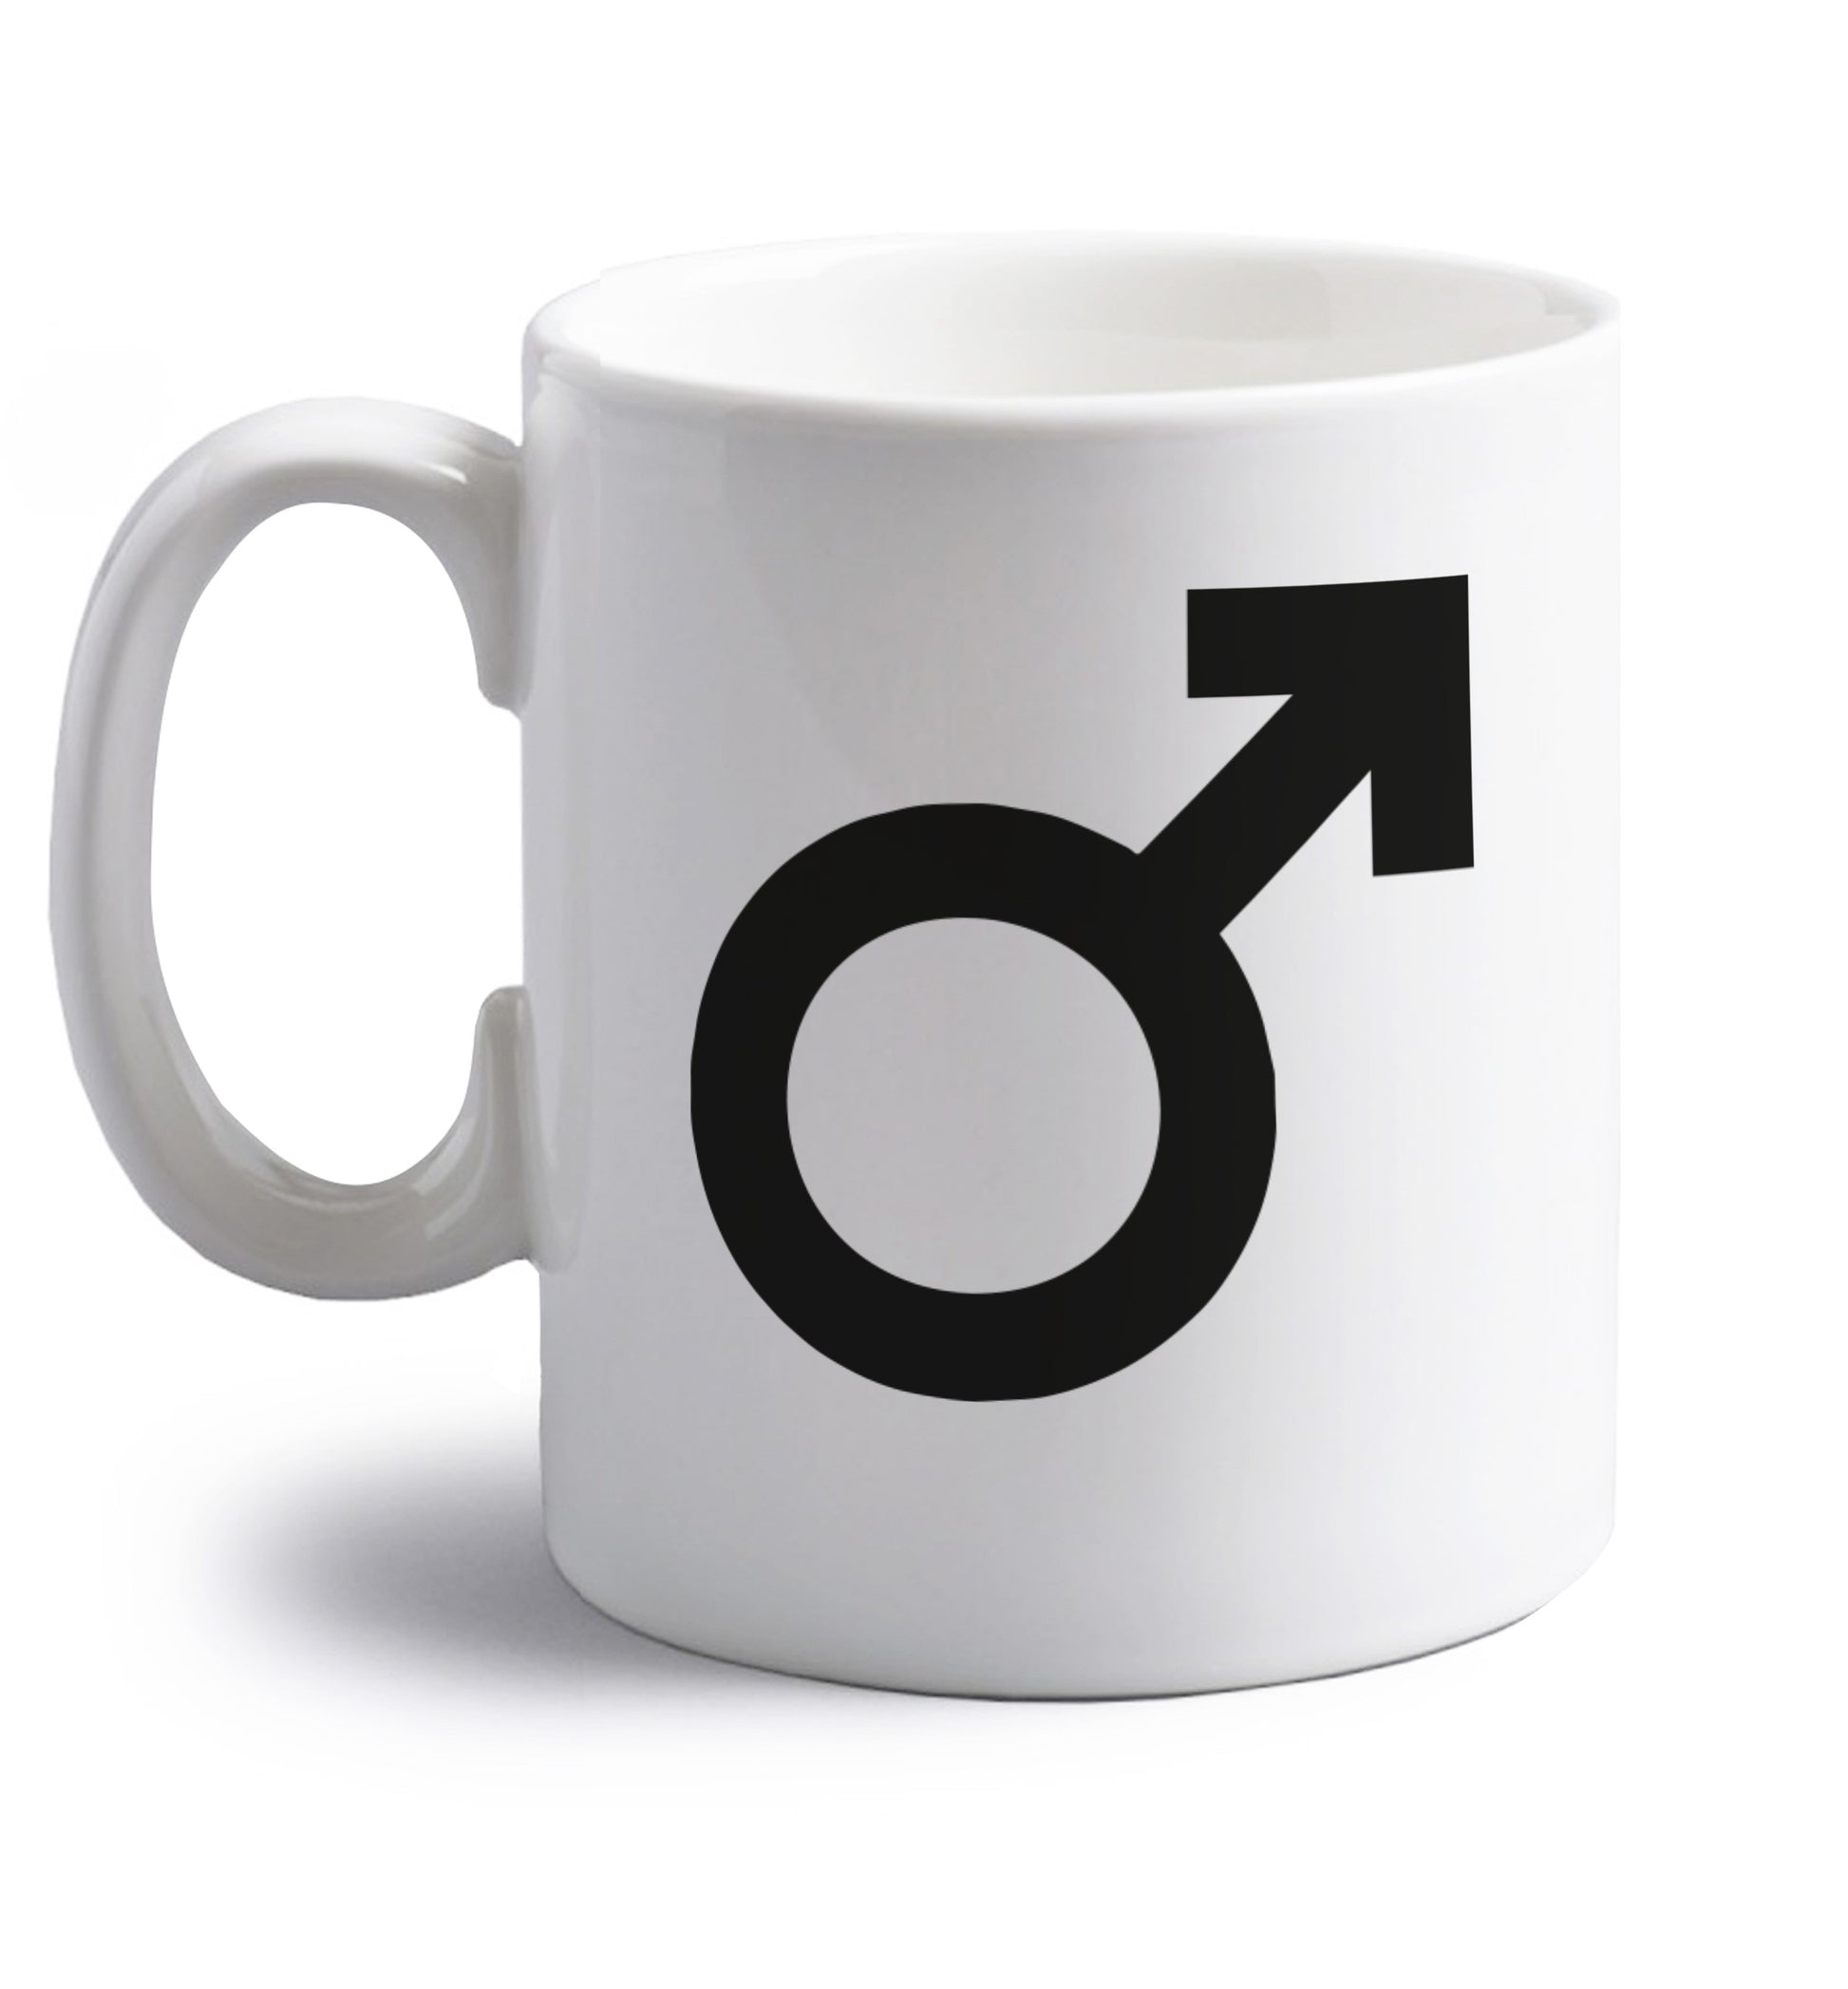 Male symbol large right handed white ceramic mug 